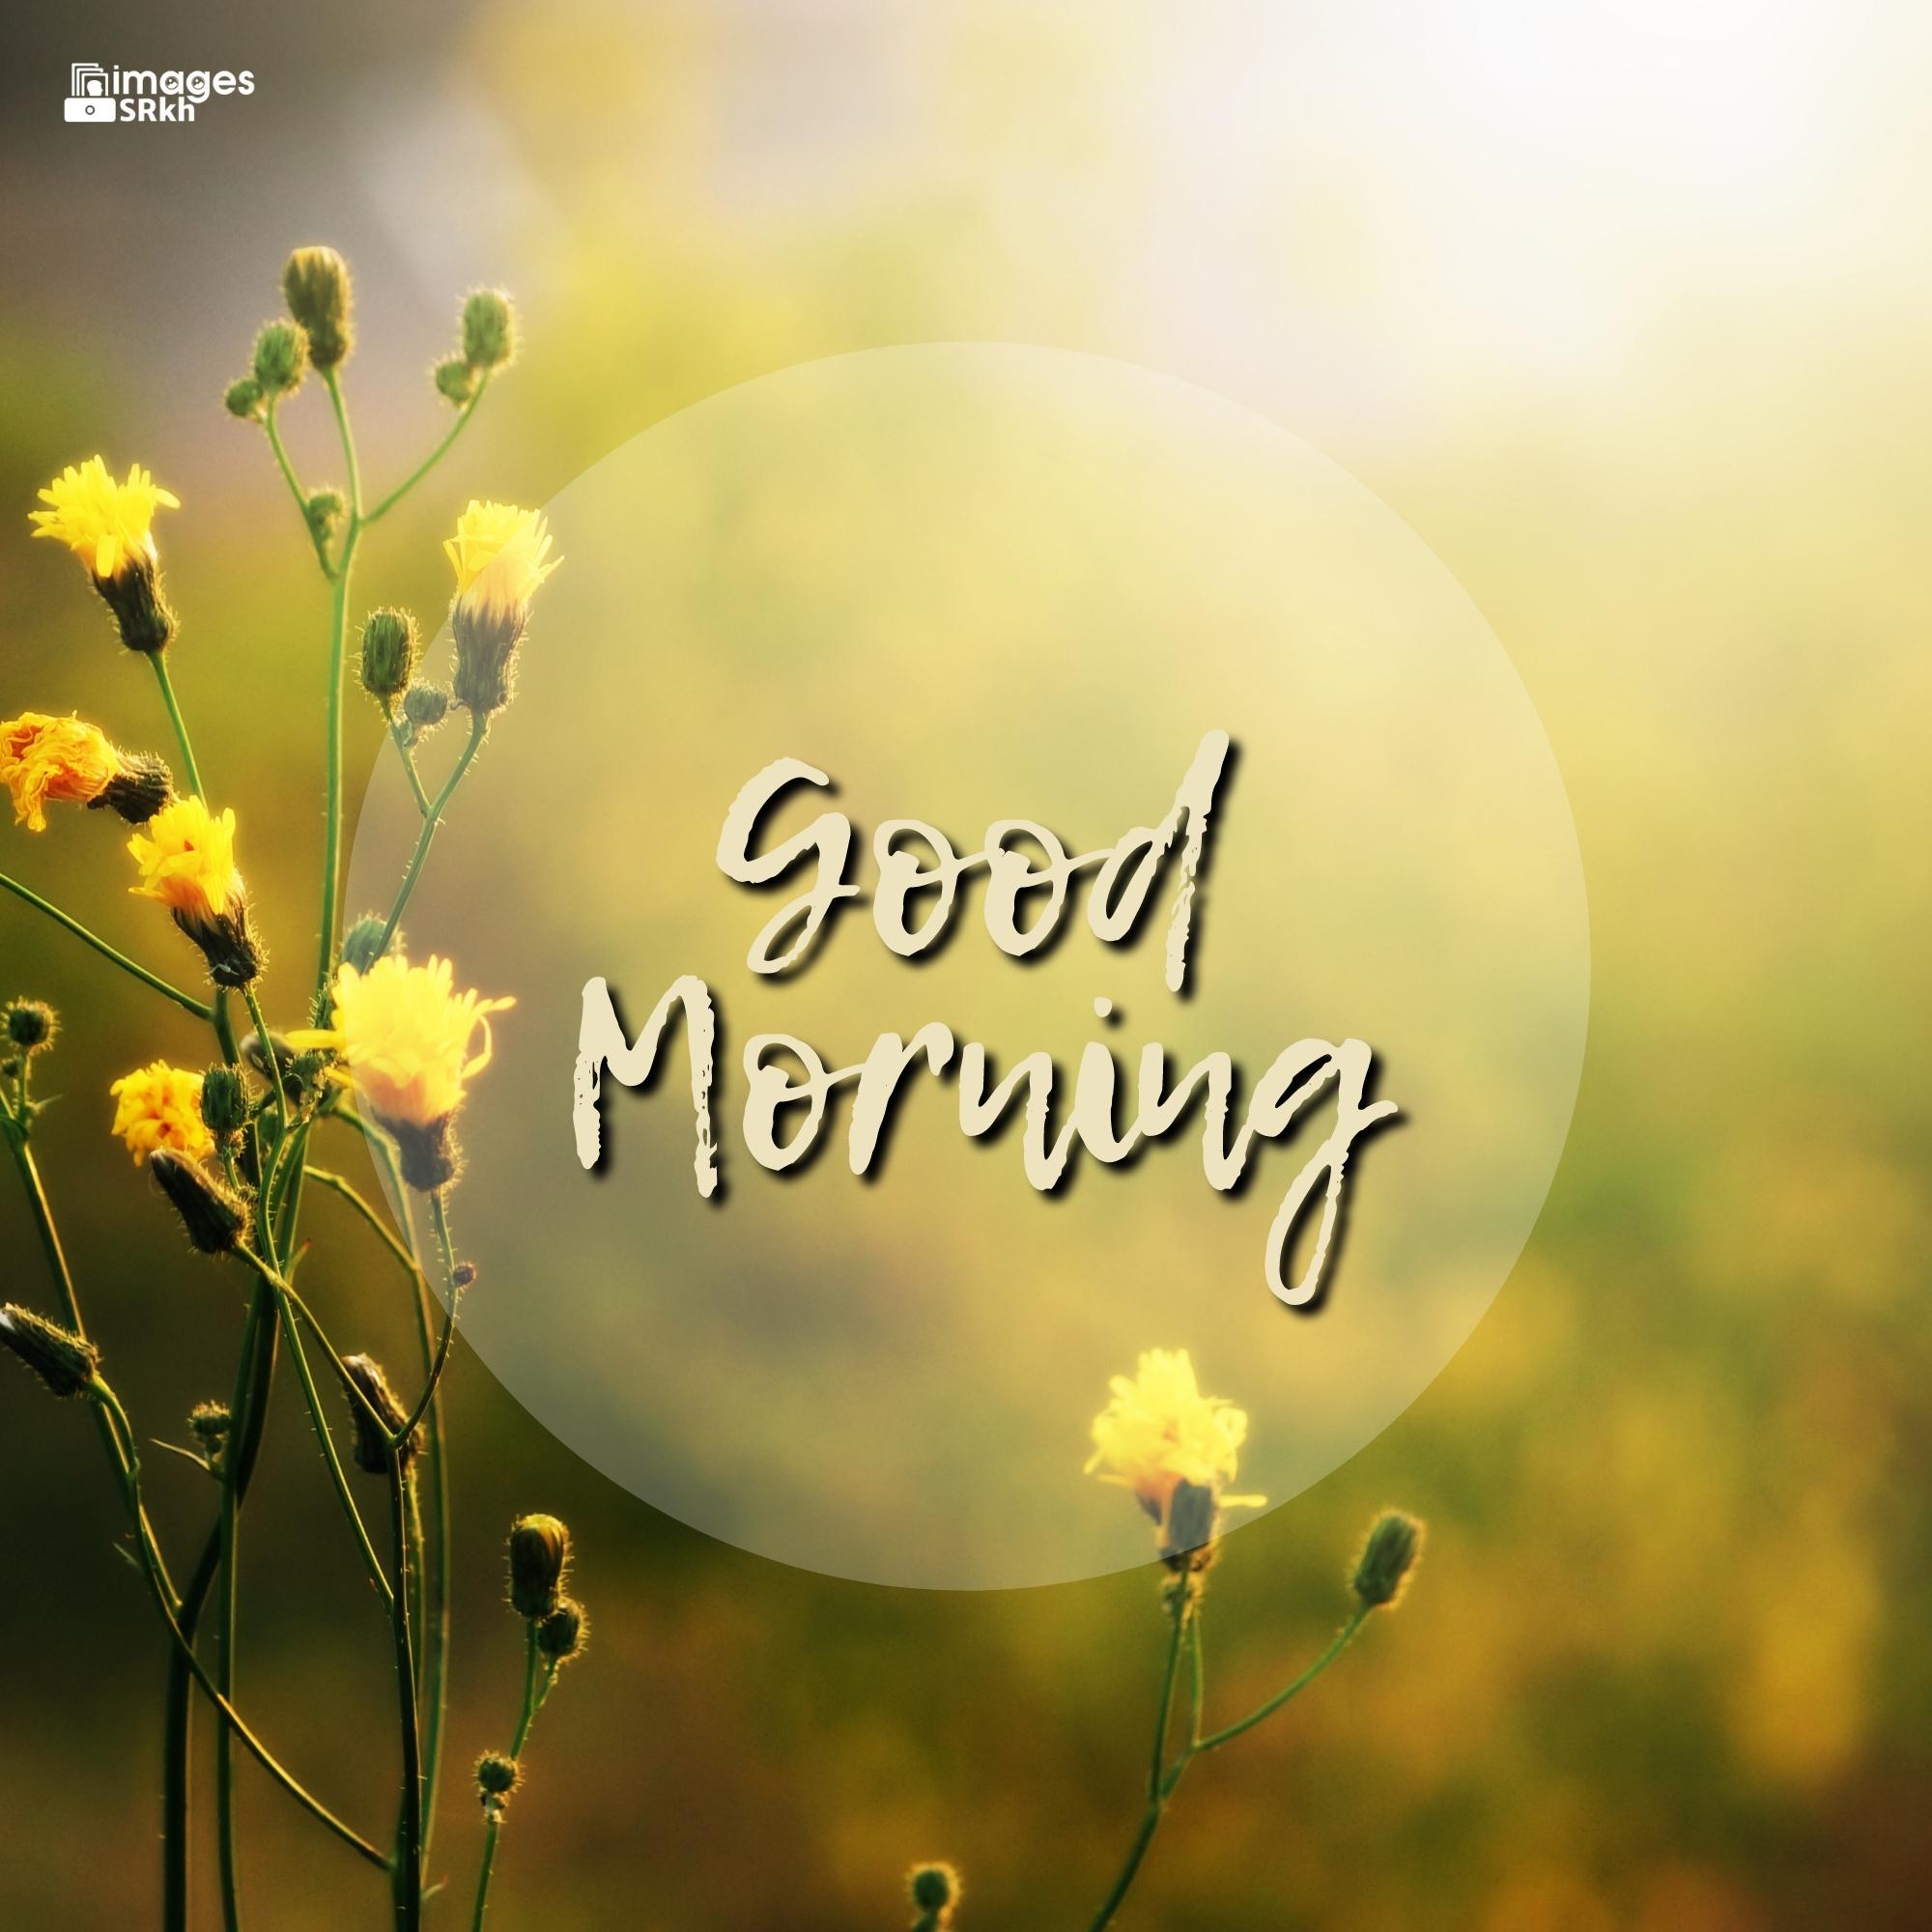 🔥 Green Nature Good Morning Images Hd Download free - Images SRkh